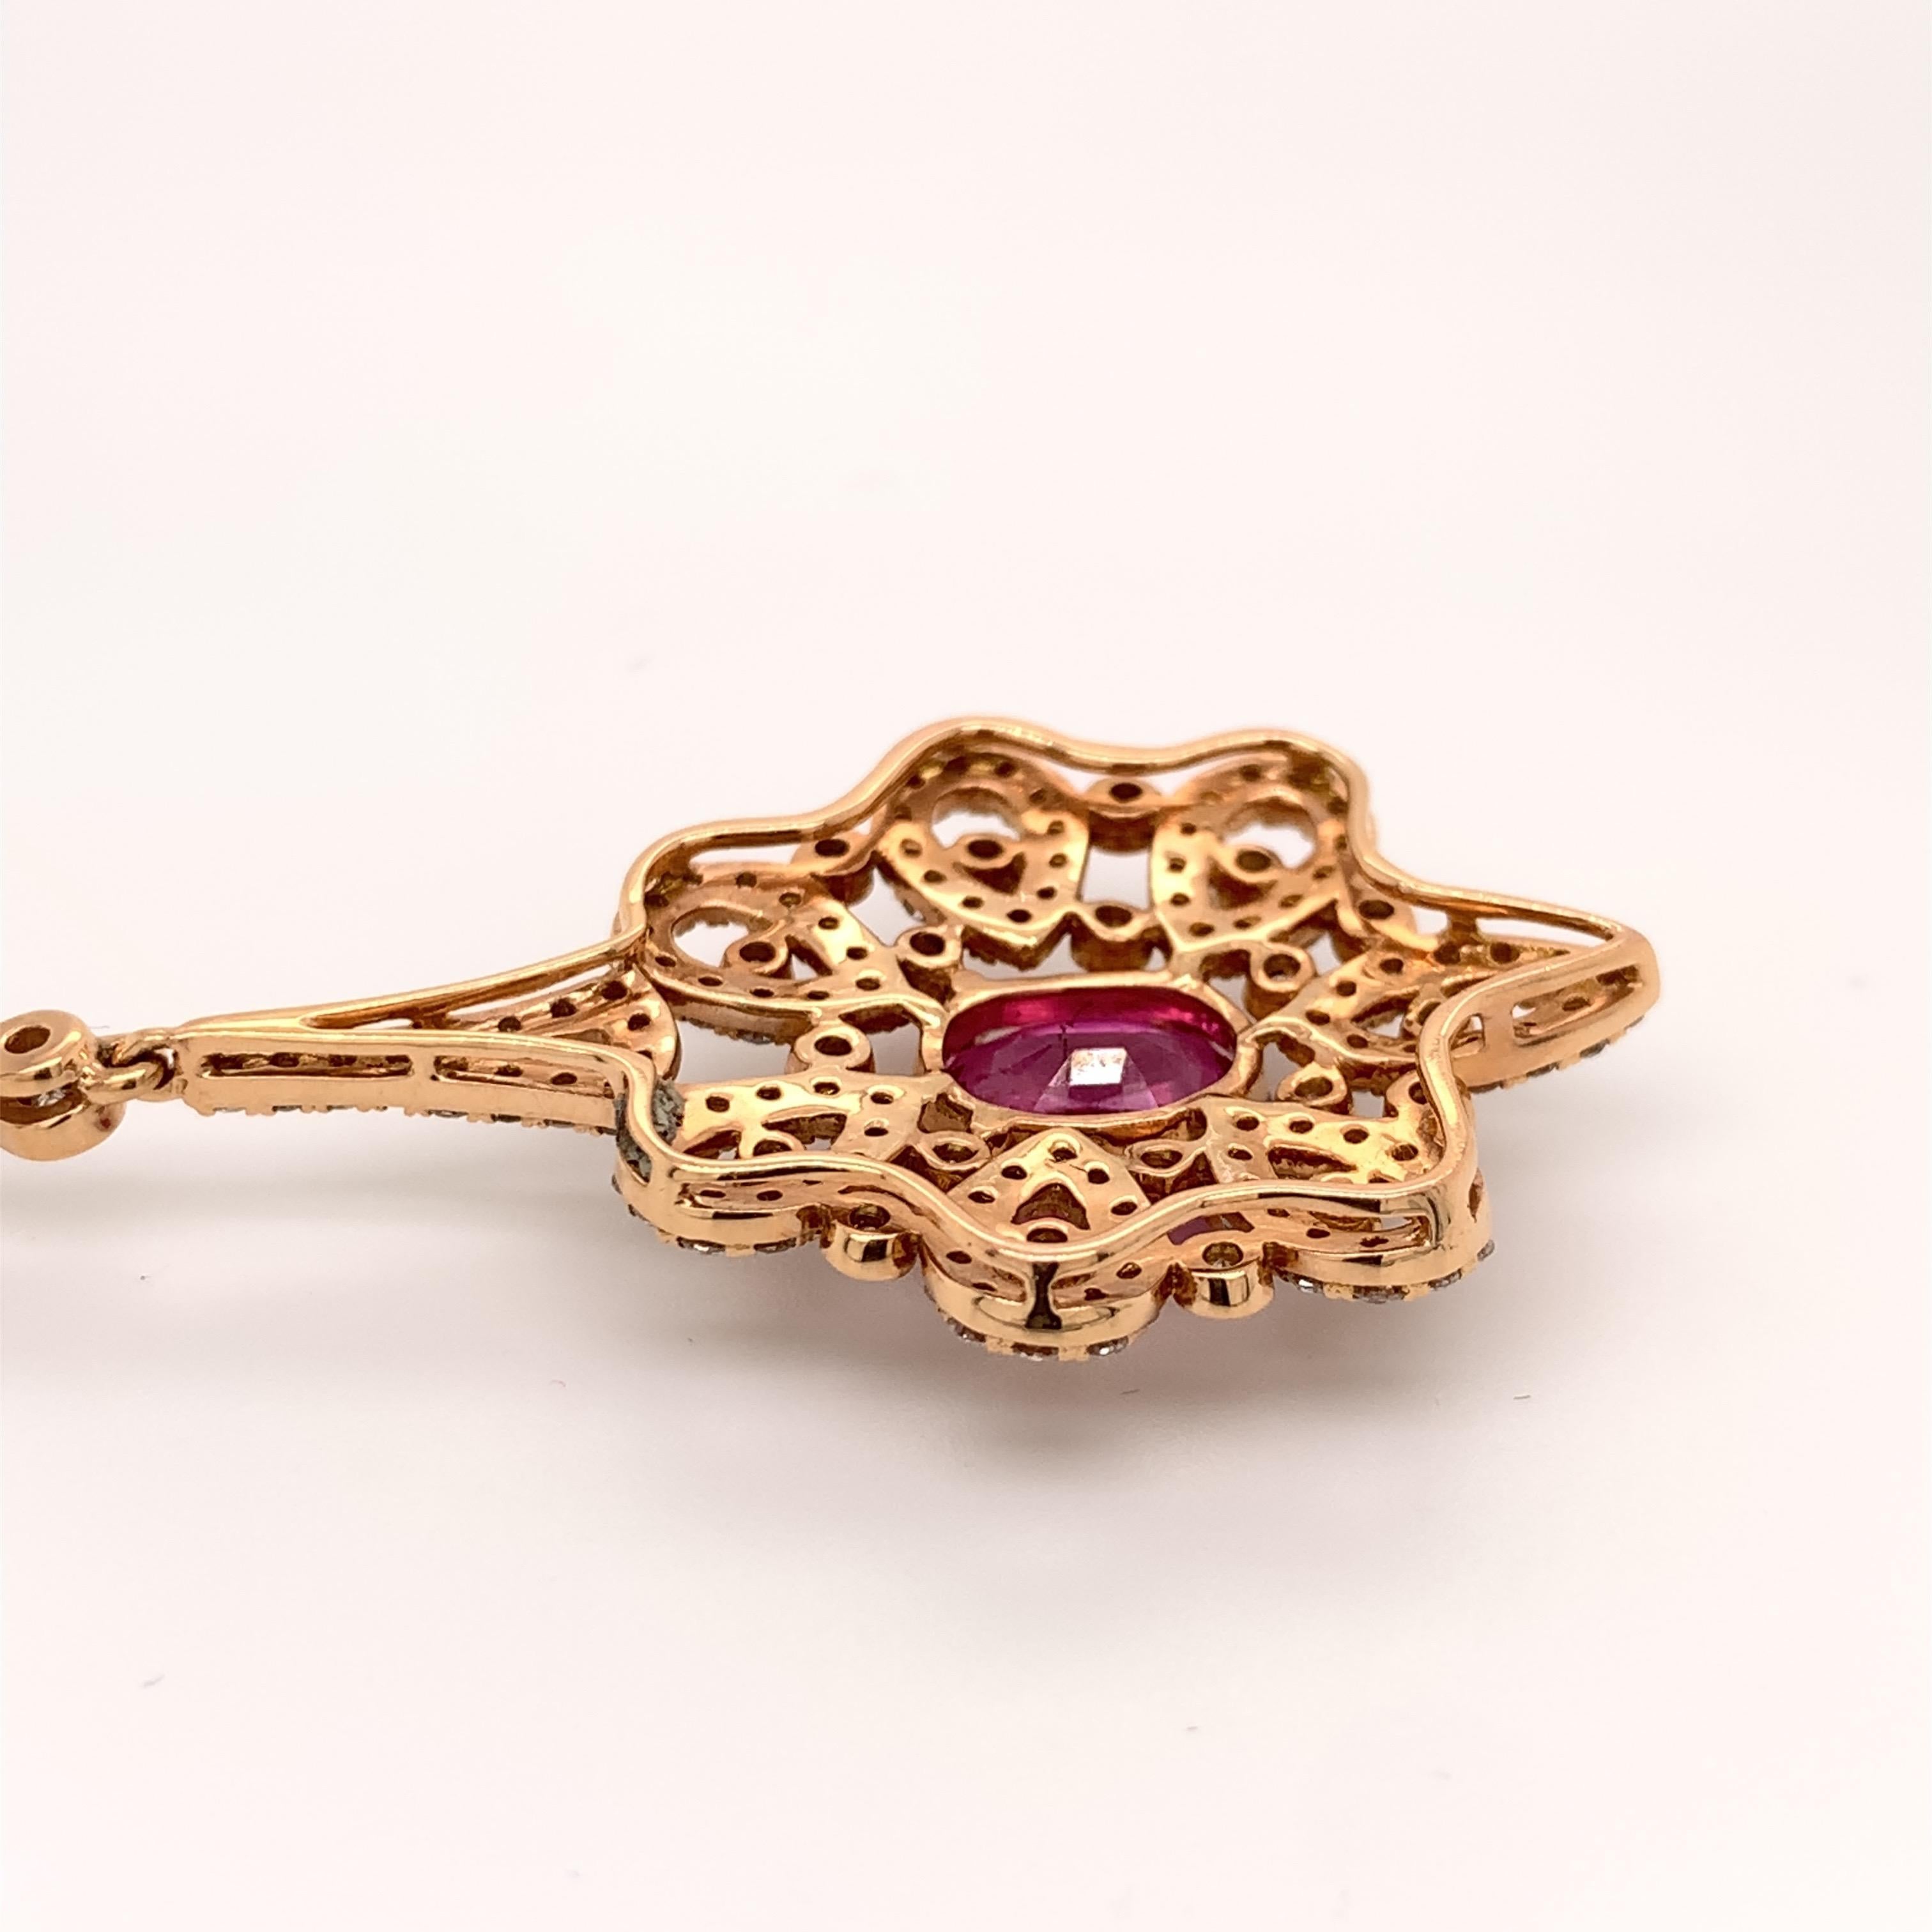 Contemporary 1.88 Carat Intense Pink Sapphire Pendant Necklace